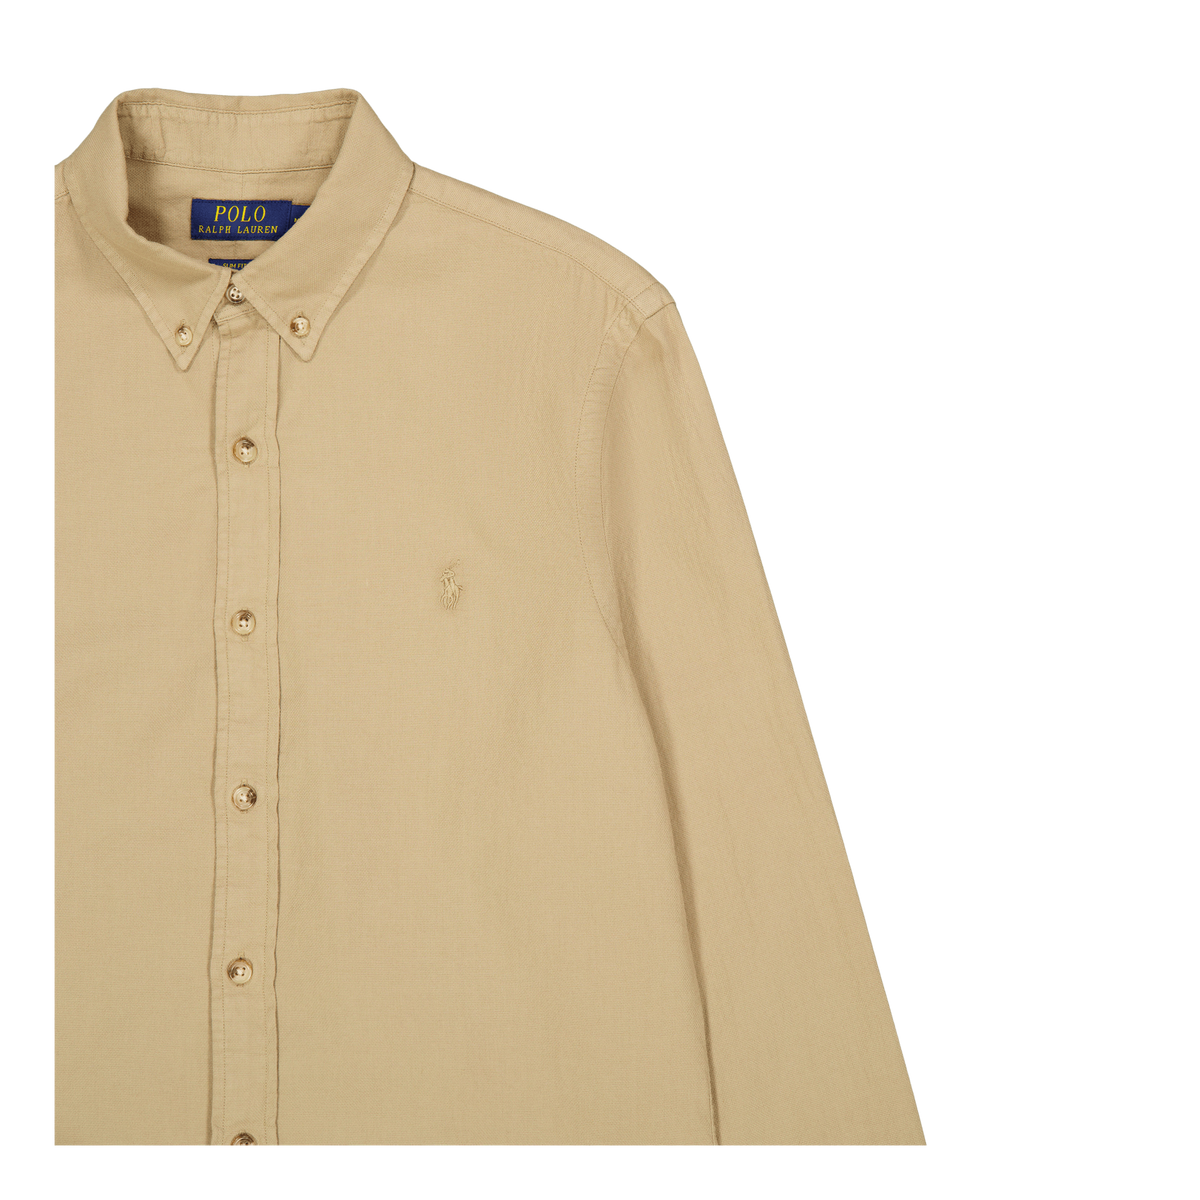 Polo Ralph Lauren Cotton Texture Shirt Surrey Tan